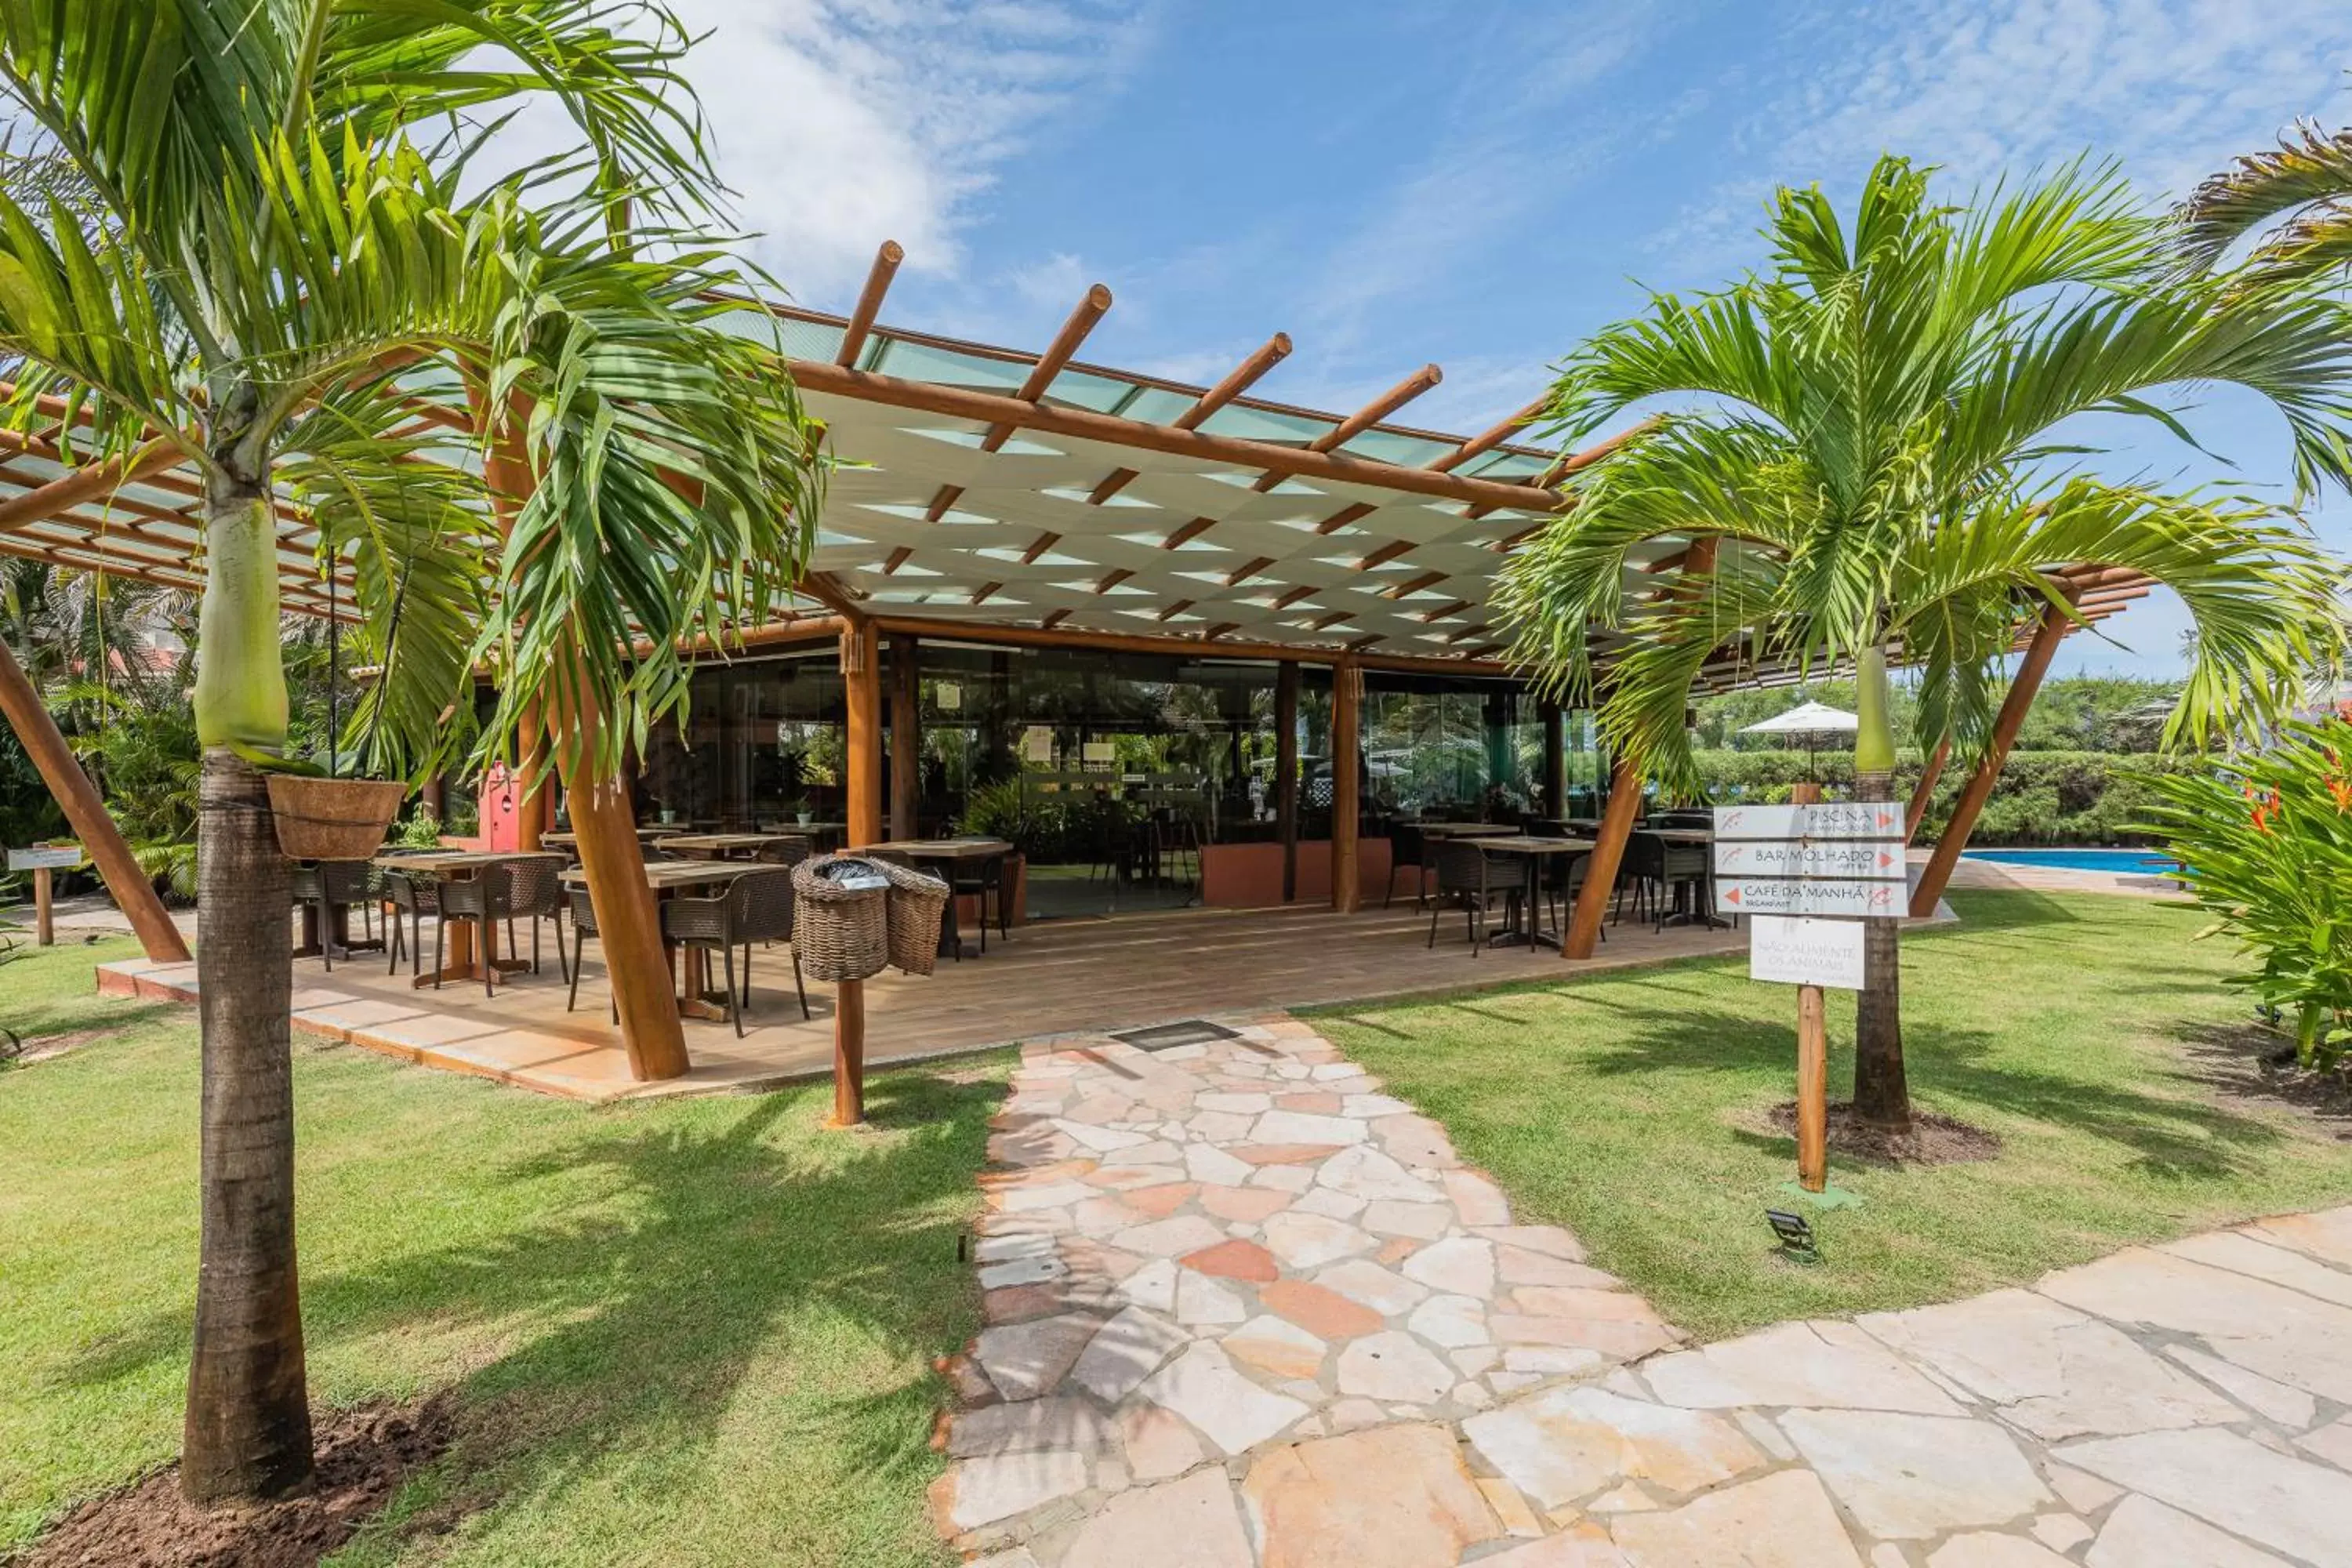 Restaurant/places to eat, Garden in Aruanã Eco Praia Hotel